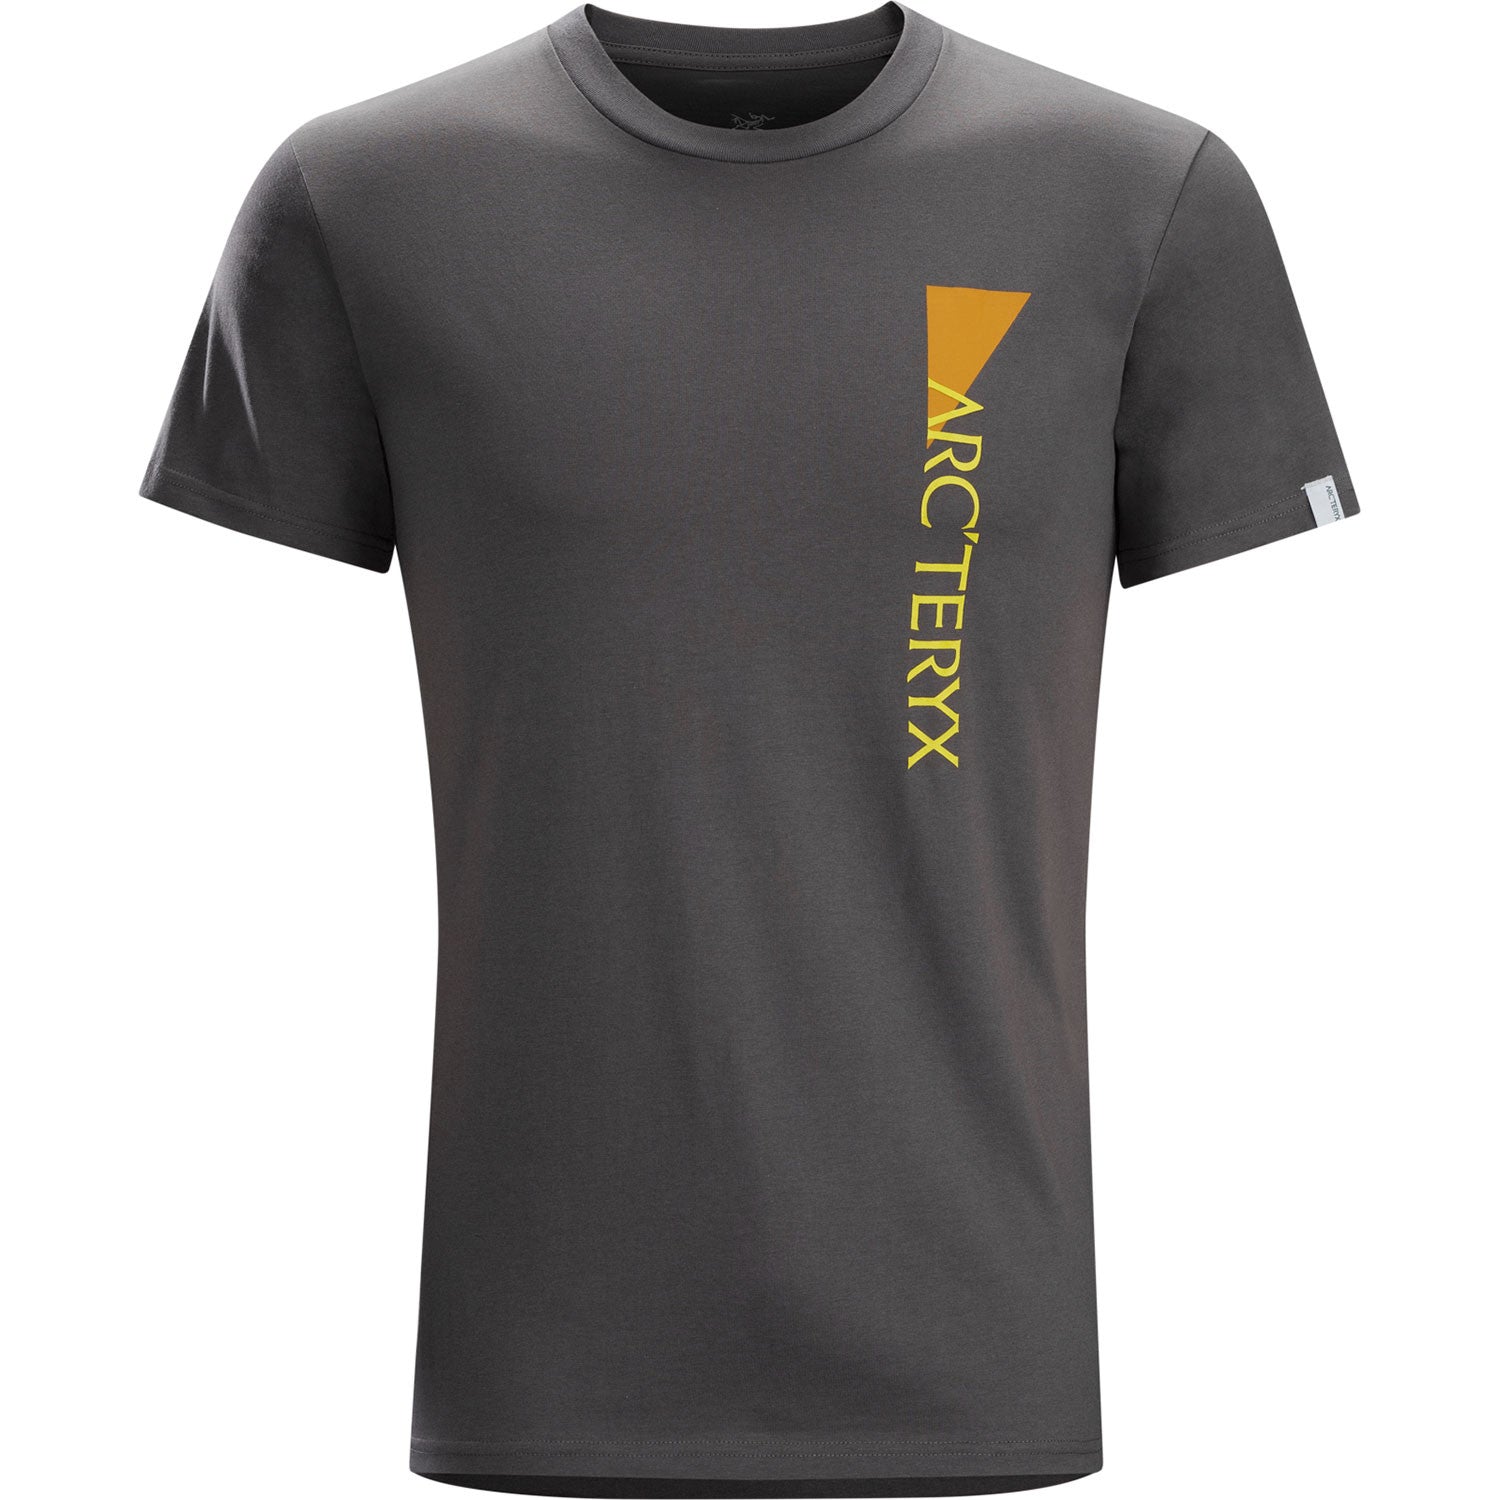 Download Arc'teryx Men's Upright T-Shirt | The Last Hunt